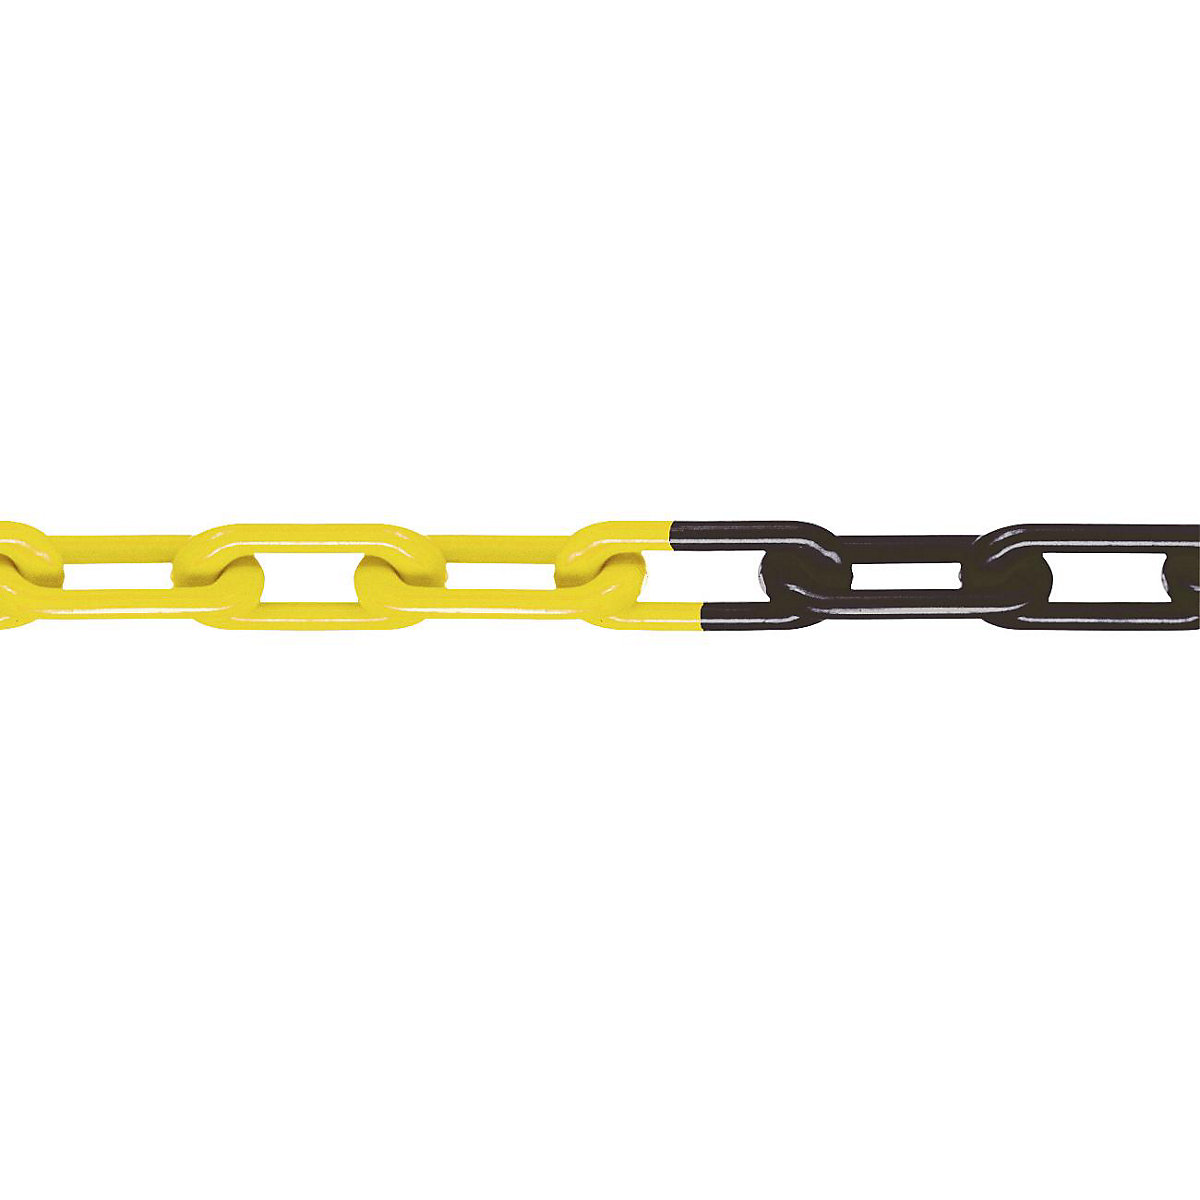 Nylon-kwaliteitsketting, MNK-kwaliteit 8, lengte 25 m, zwart/geel, vanaf 4 st.-5